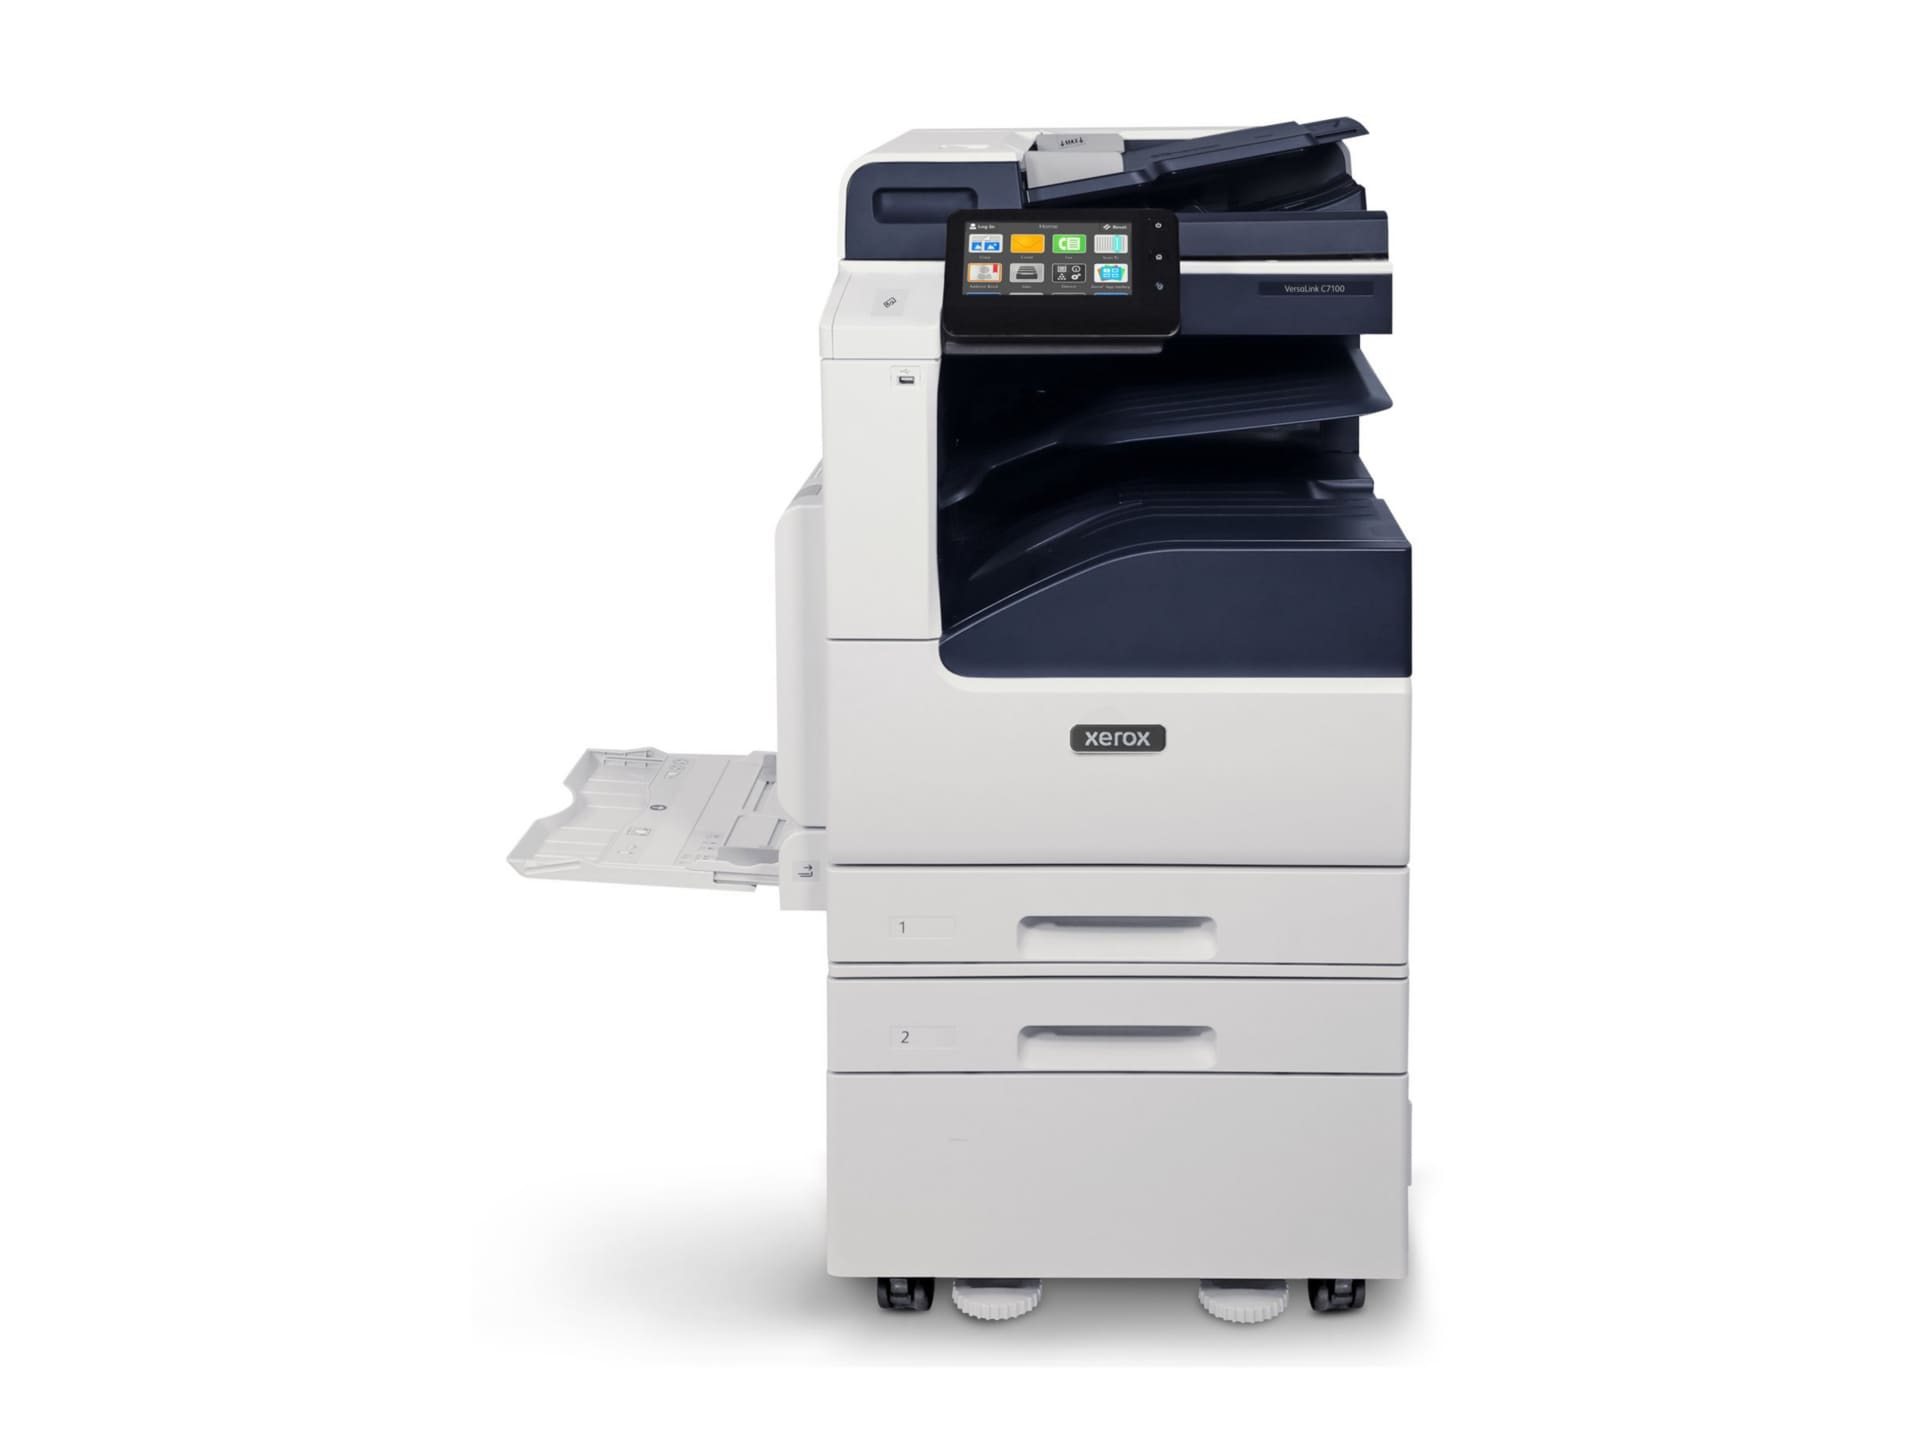 Xerox VersaLink C7120/ENGS2 - multifunction printer - color